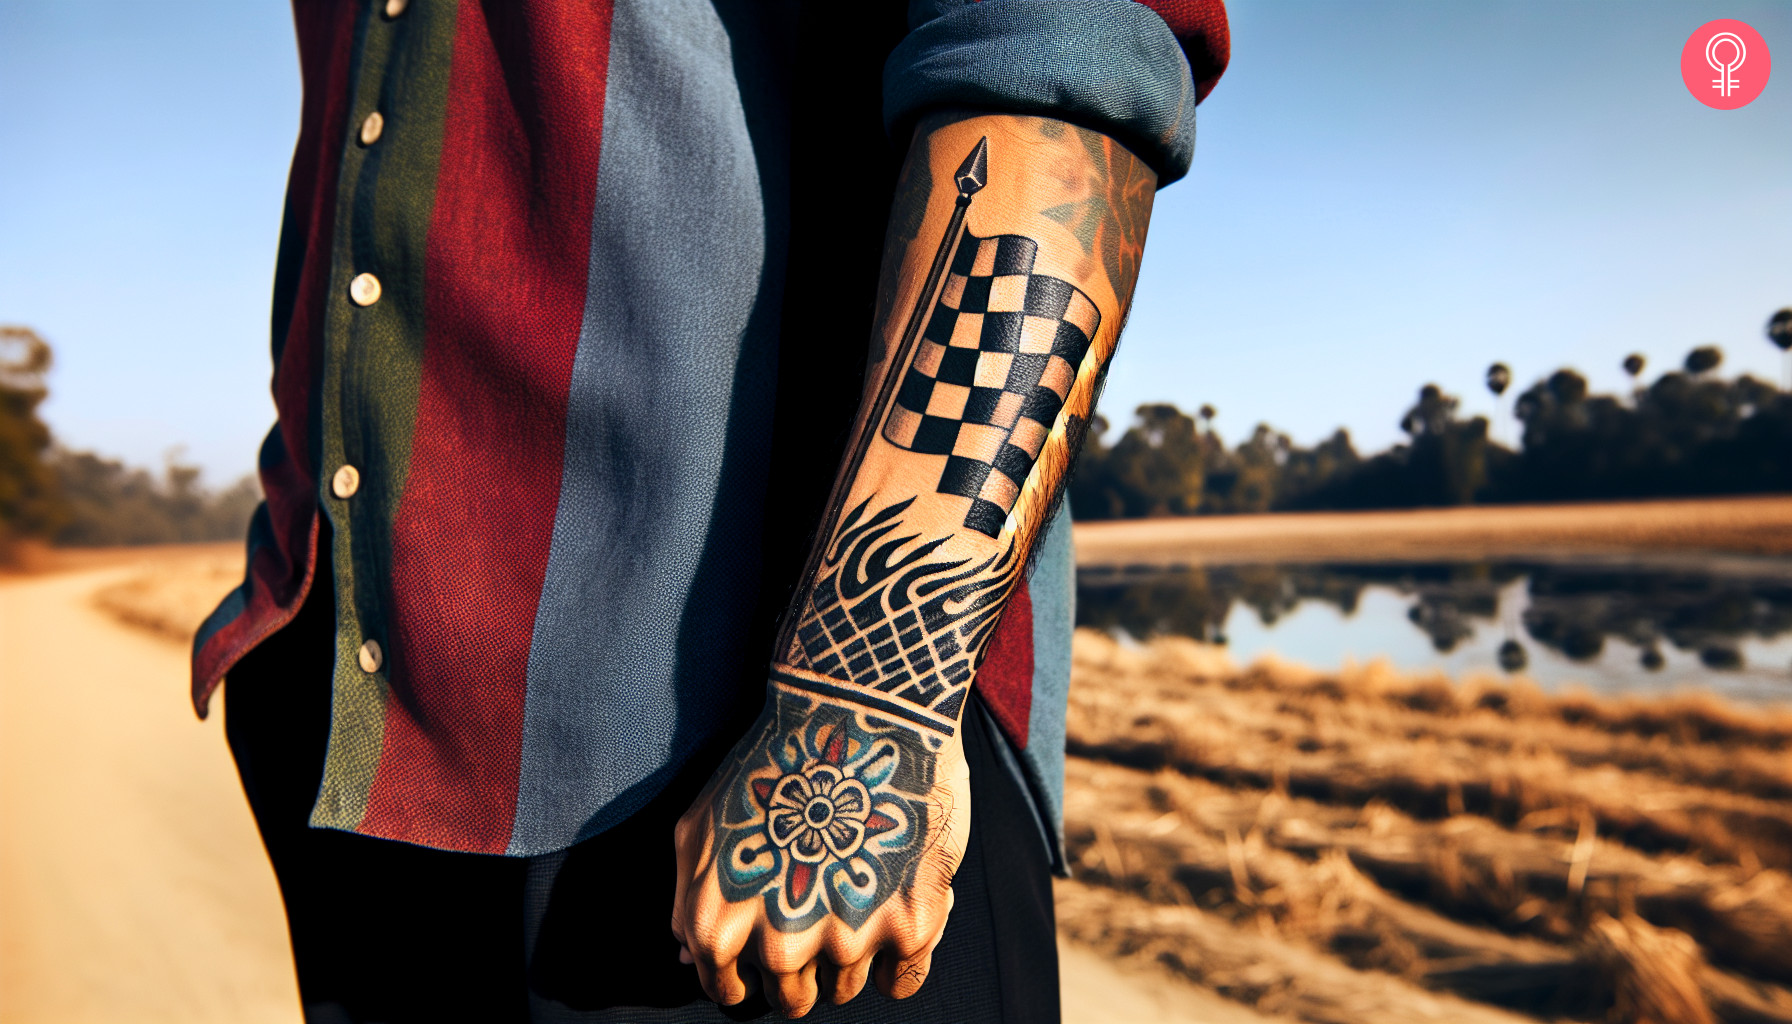 Forearm checkered flag tattoo on a man’s arm